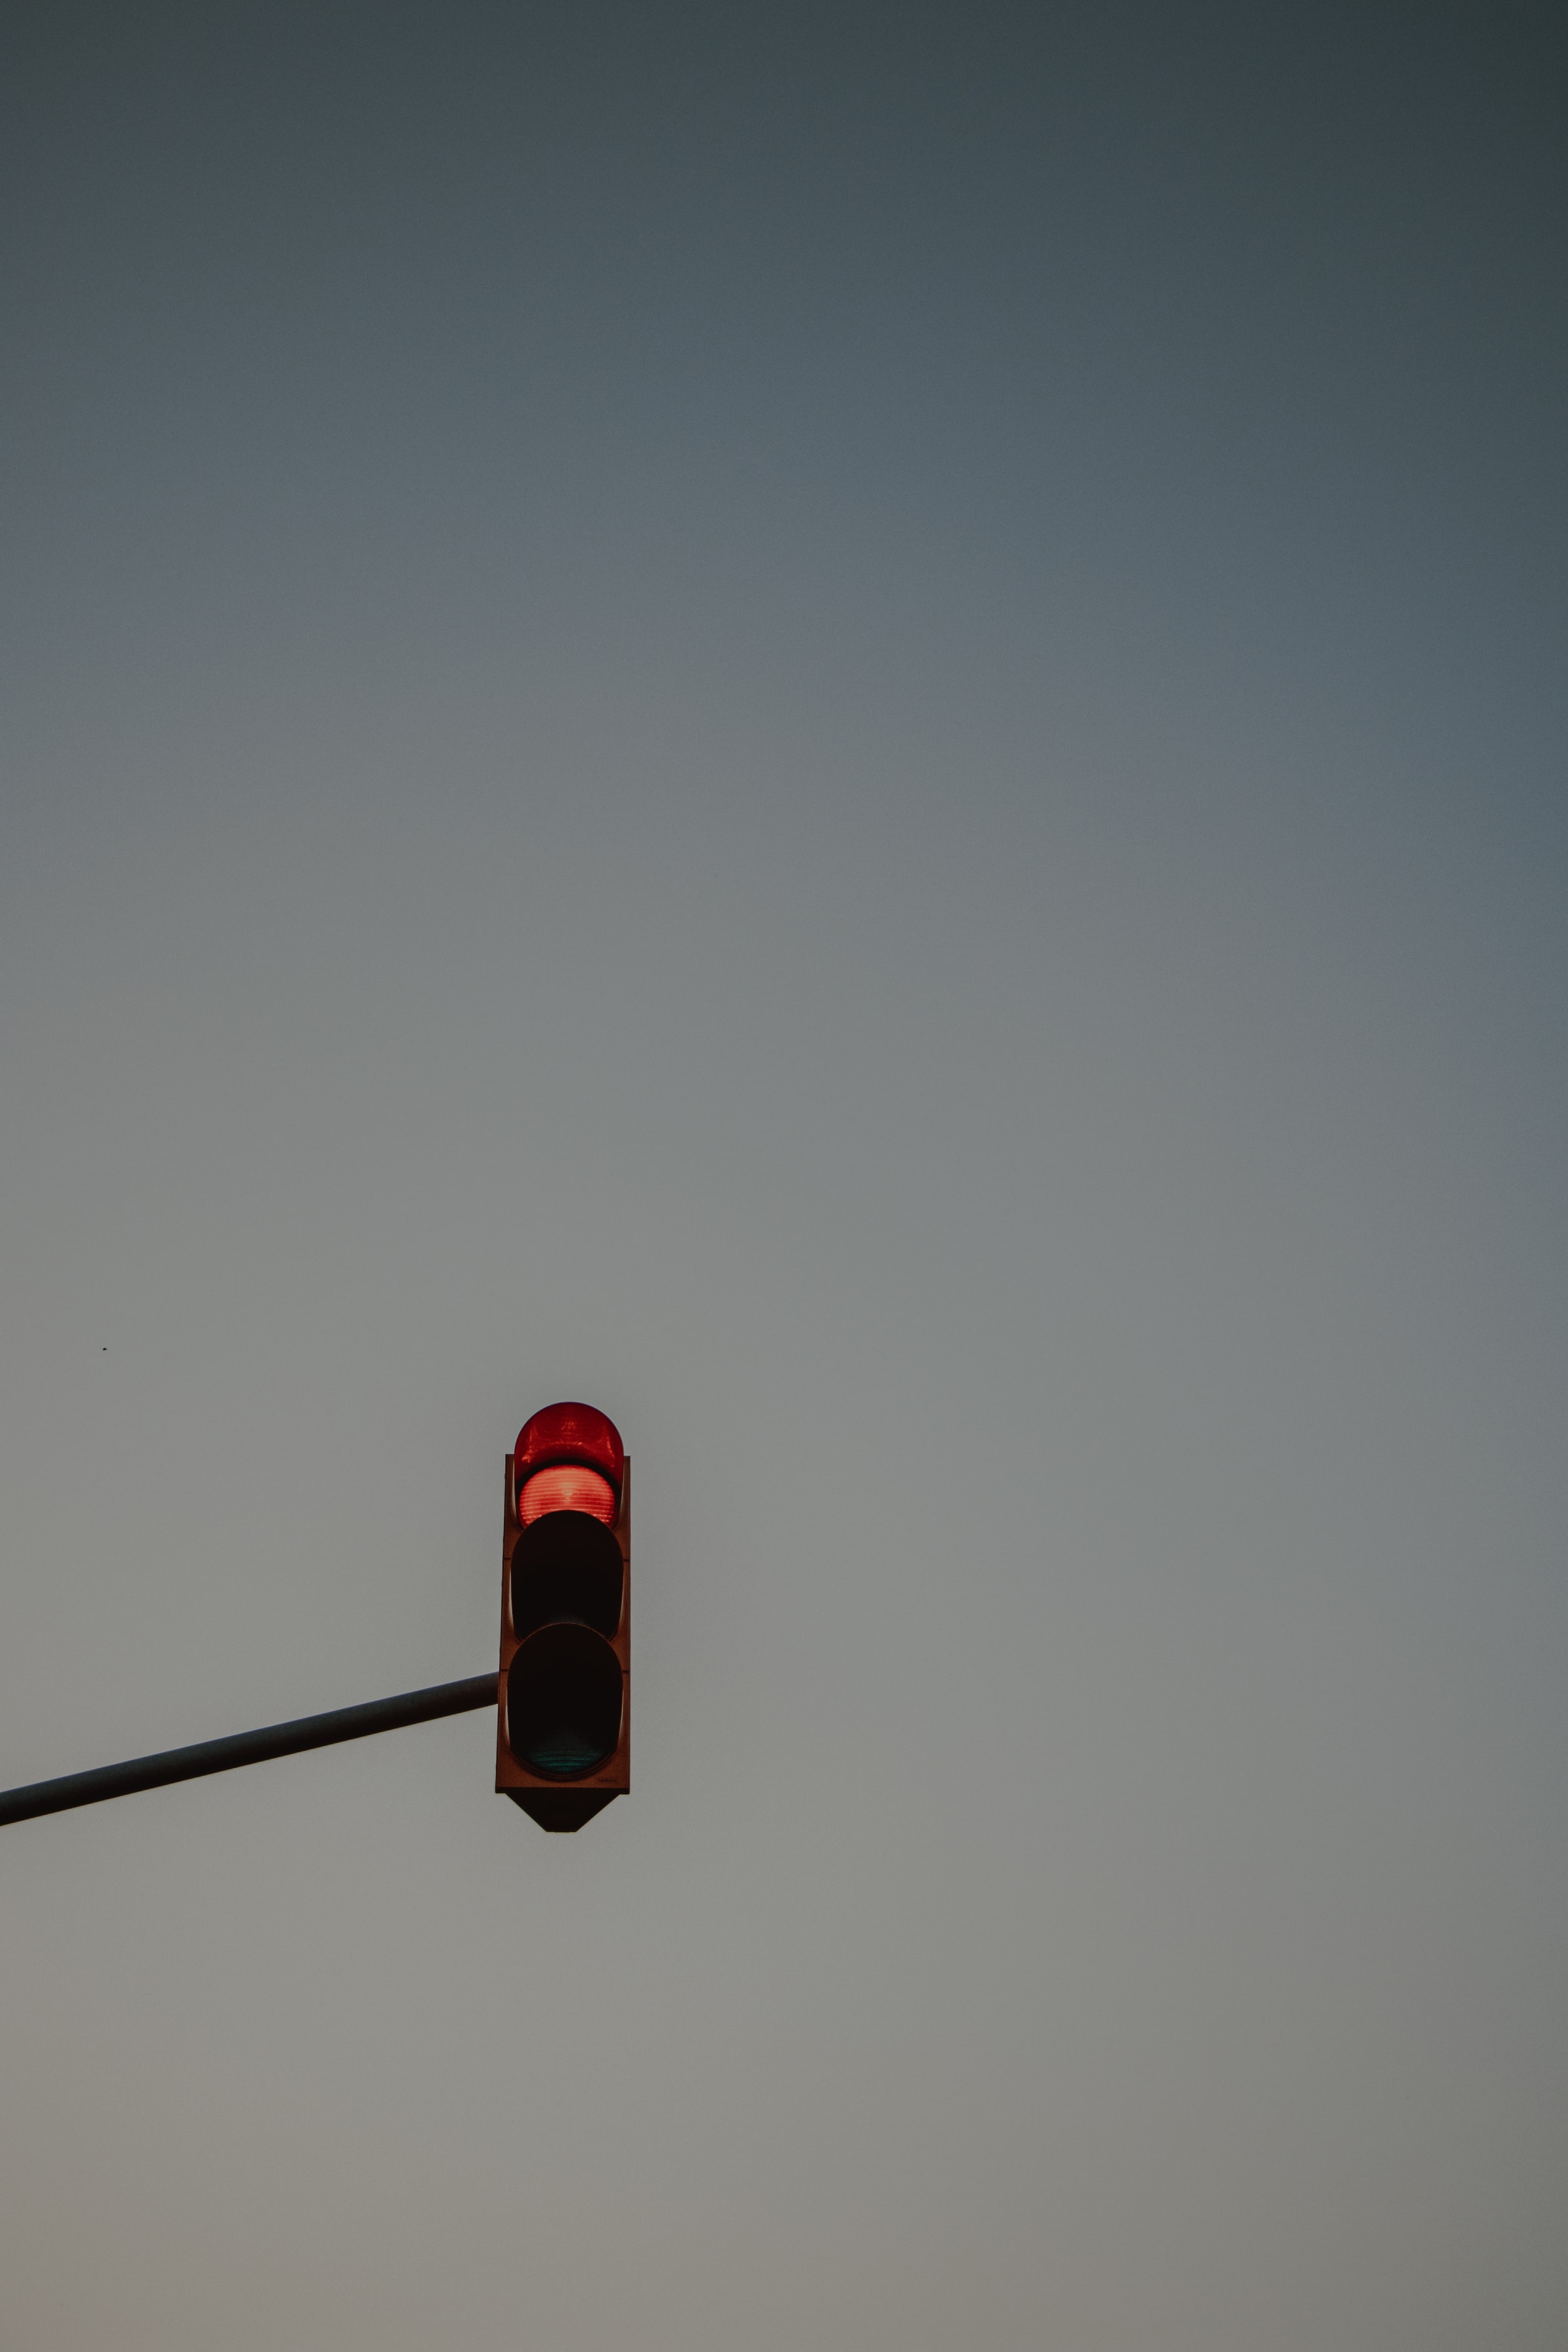 sign, minimalism, sky, traffic light